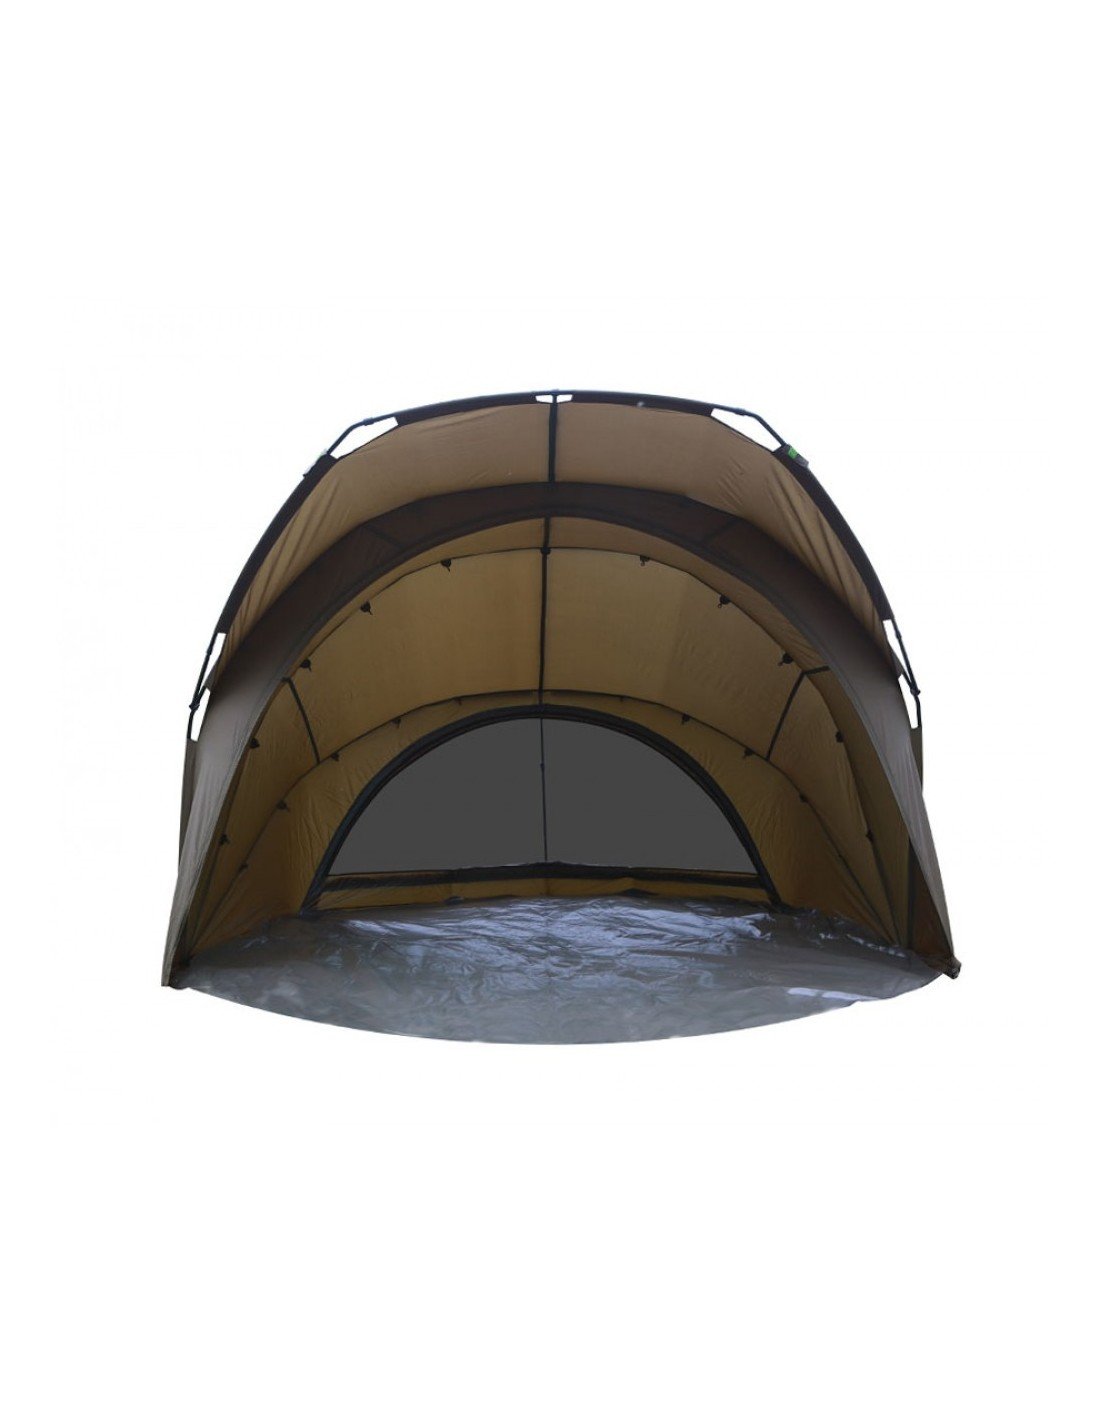 Carp Pro Diamond Dome 2 Man CPB0252 палатка